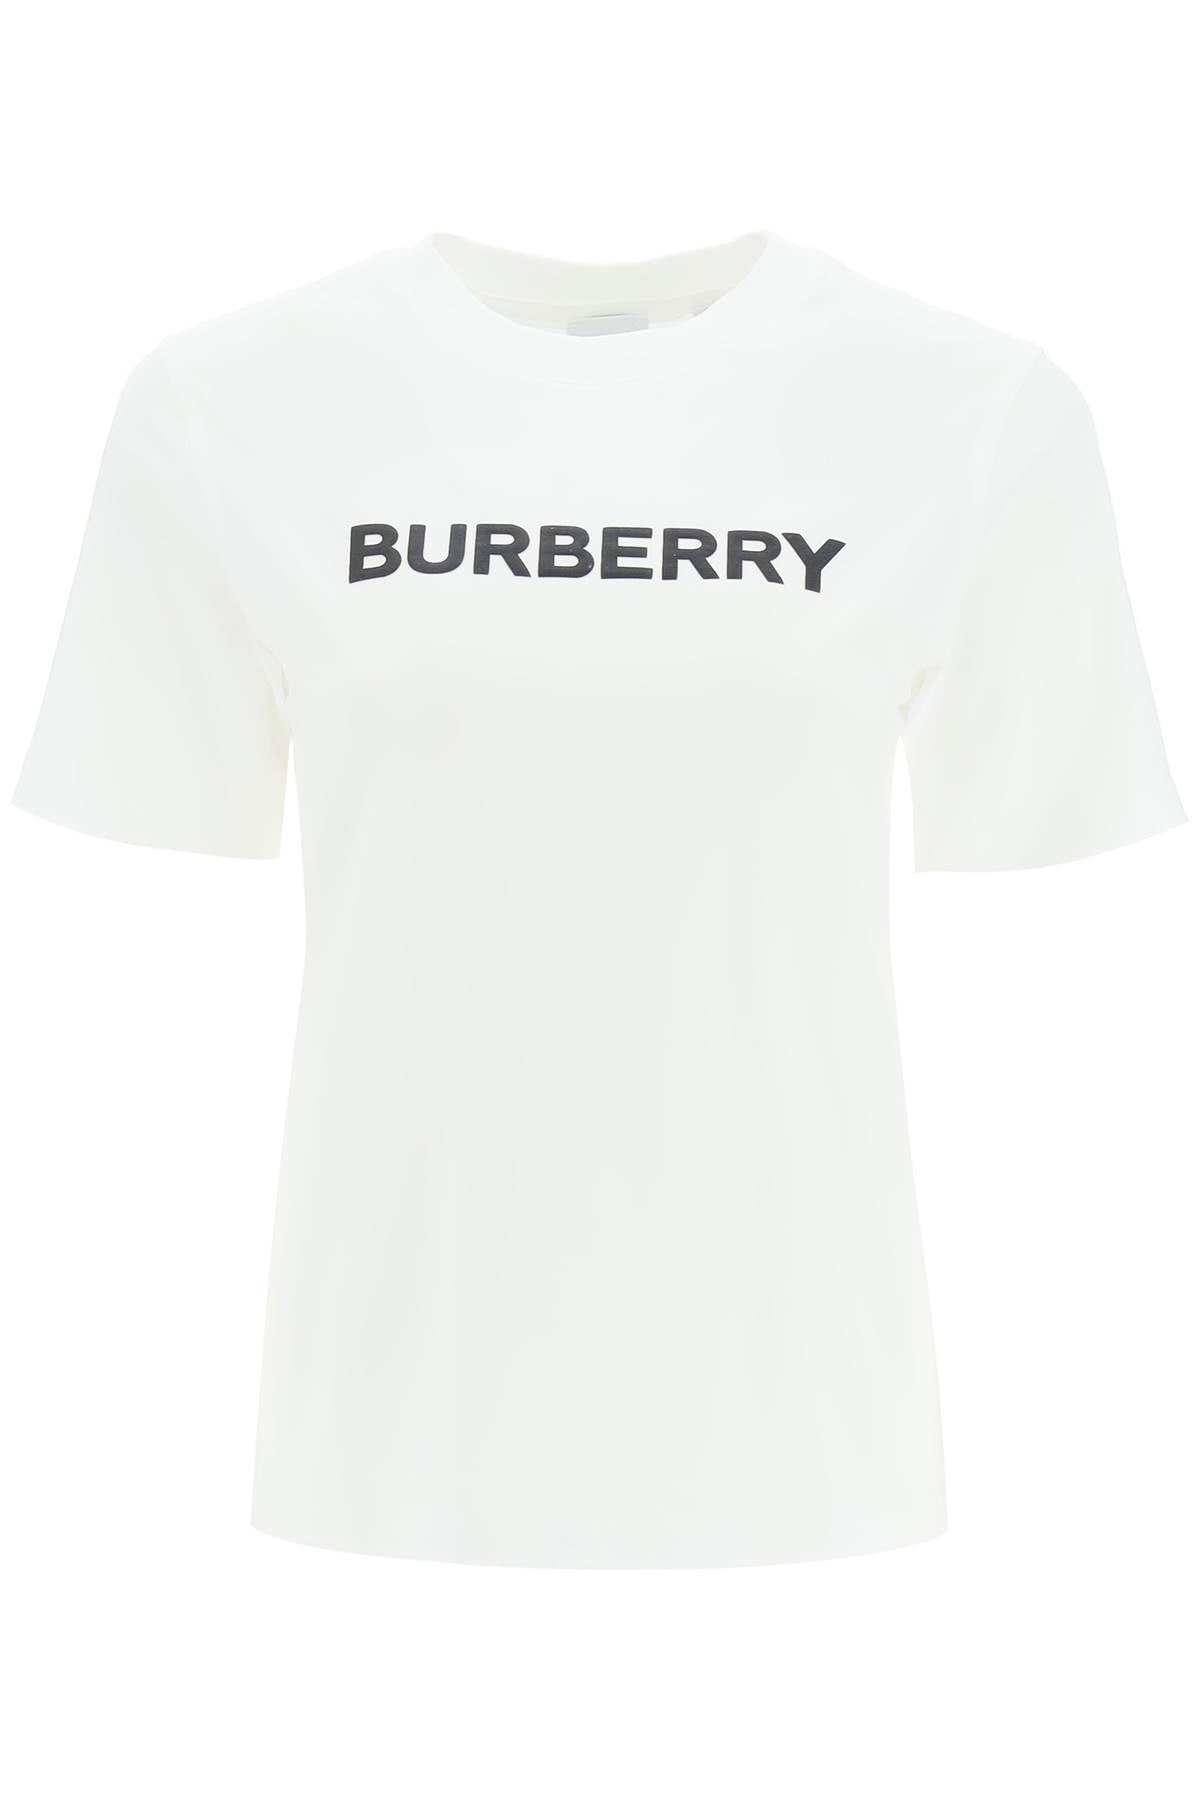 Burberry logo t-shirt – Italy Station